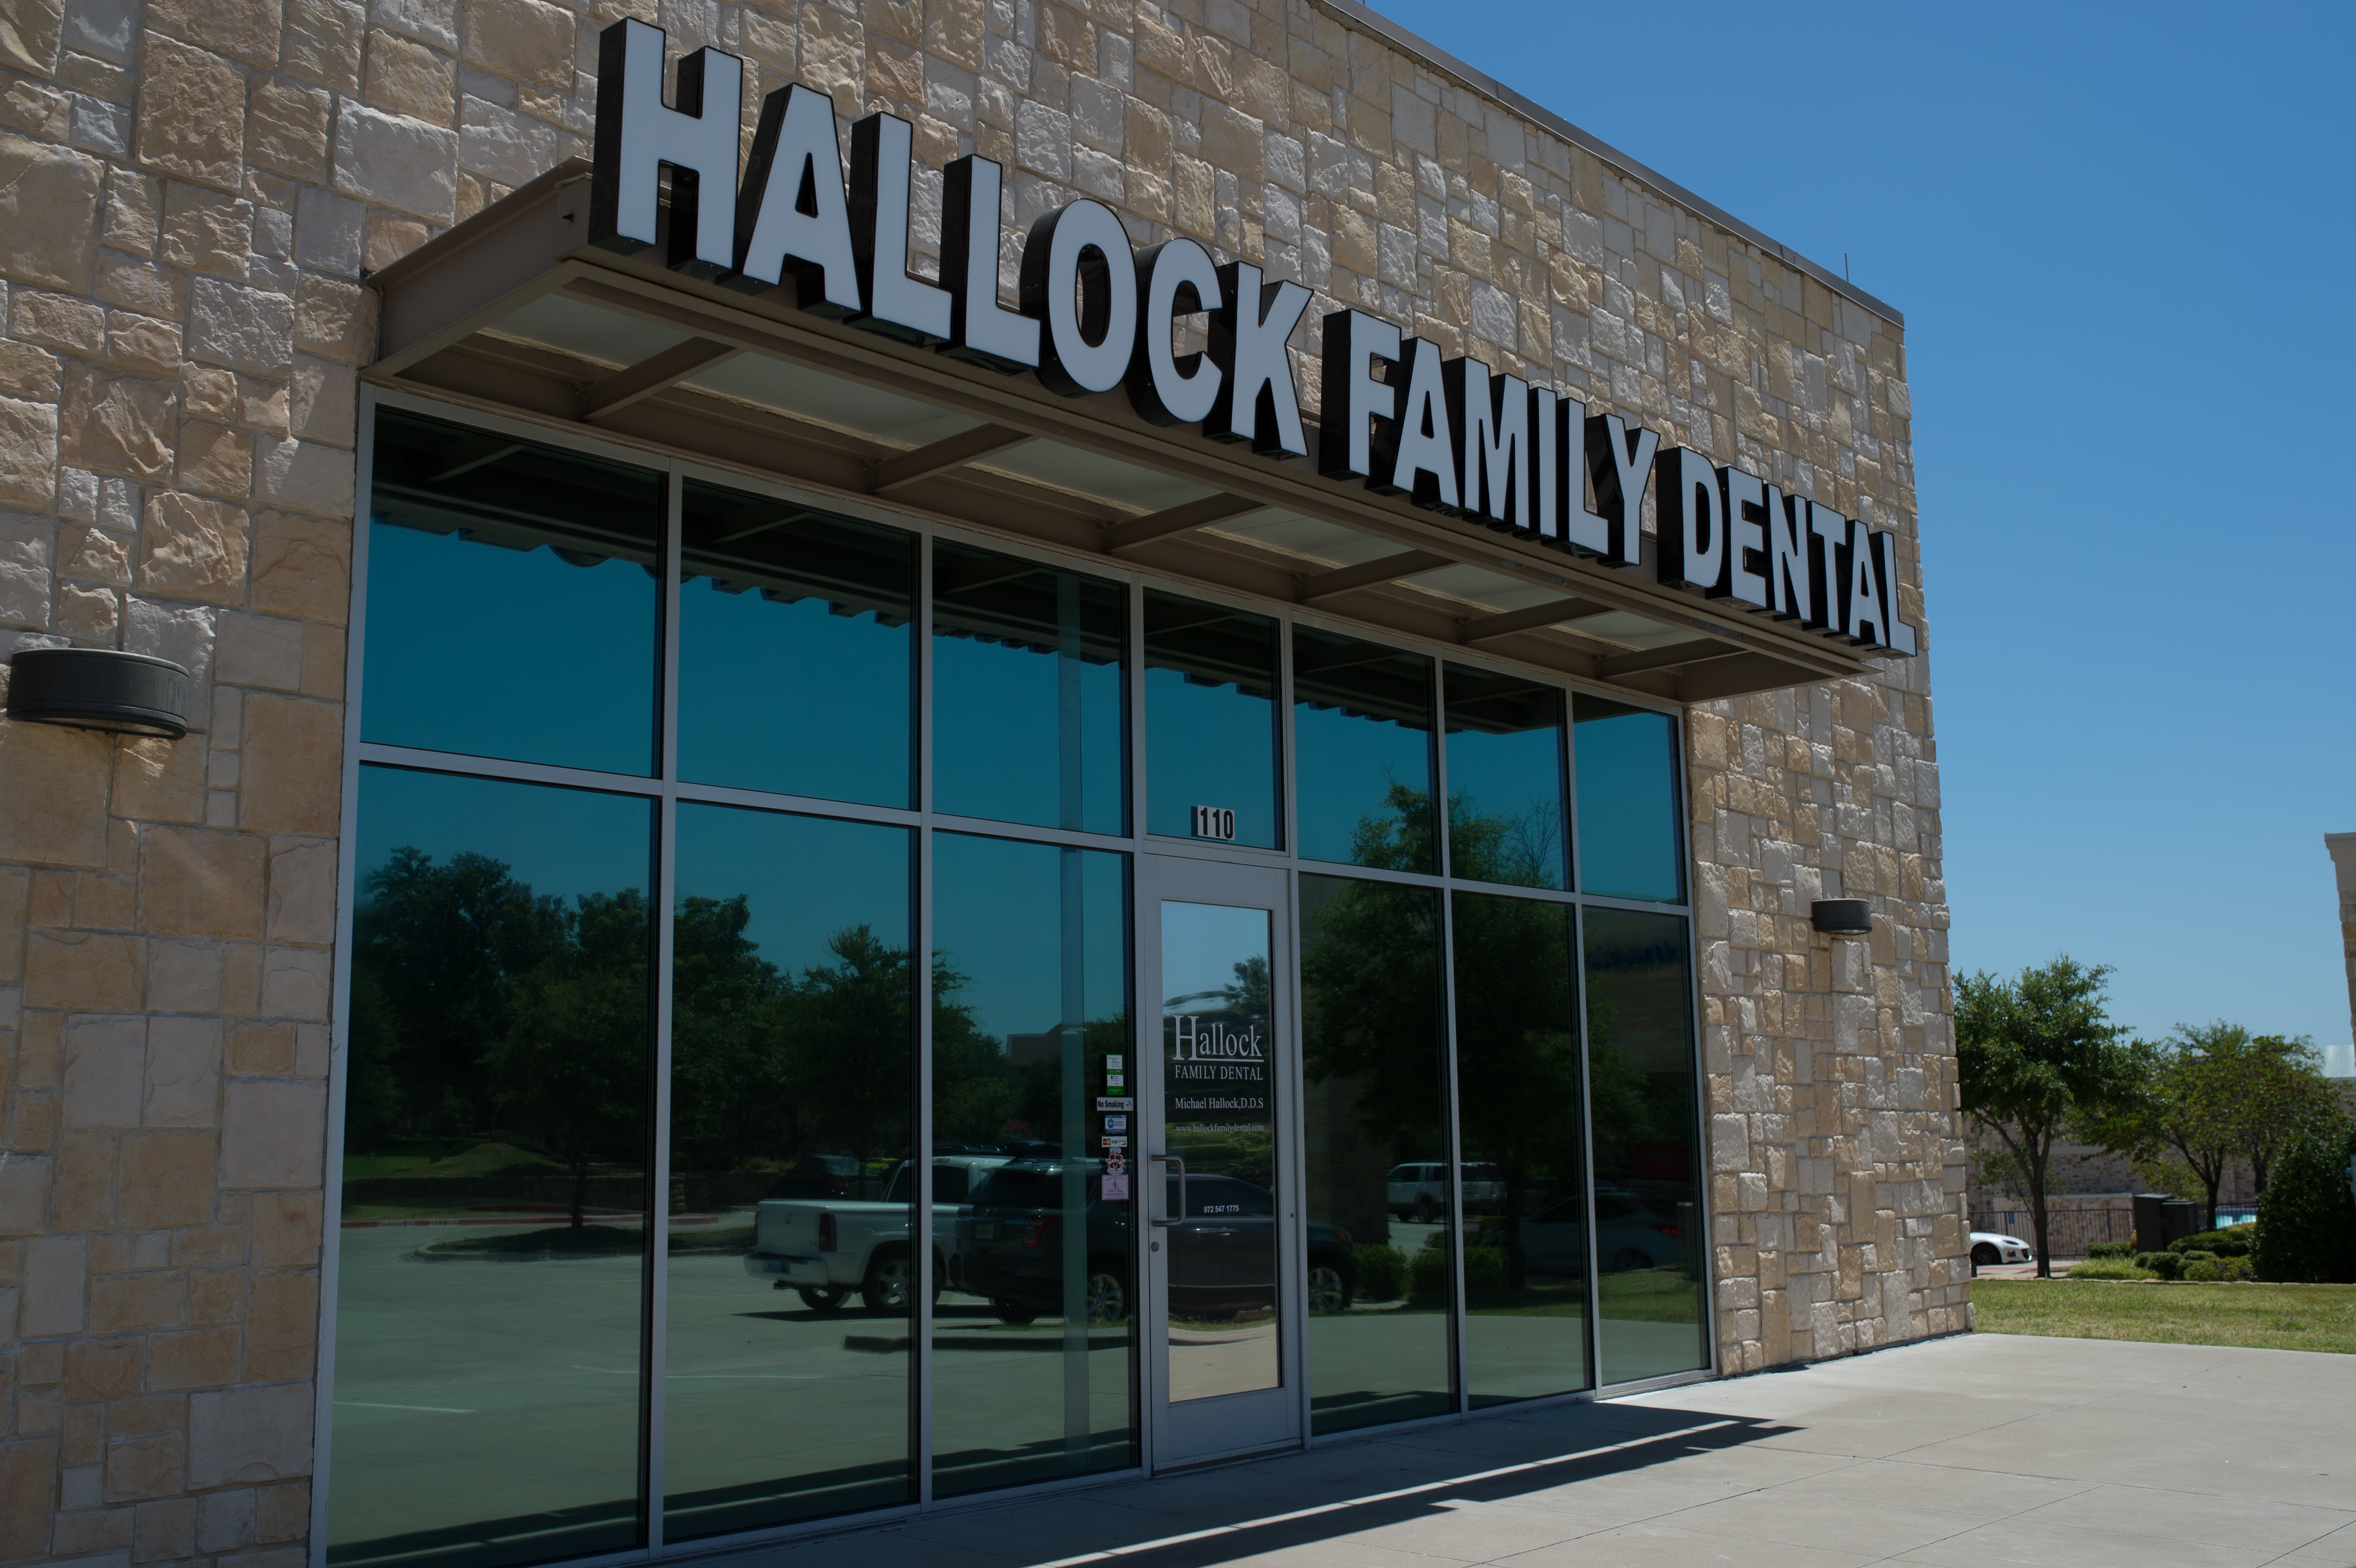 Exterior Picture Of Family Dentist Office - Hallock Family Dental